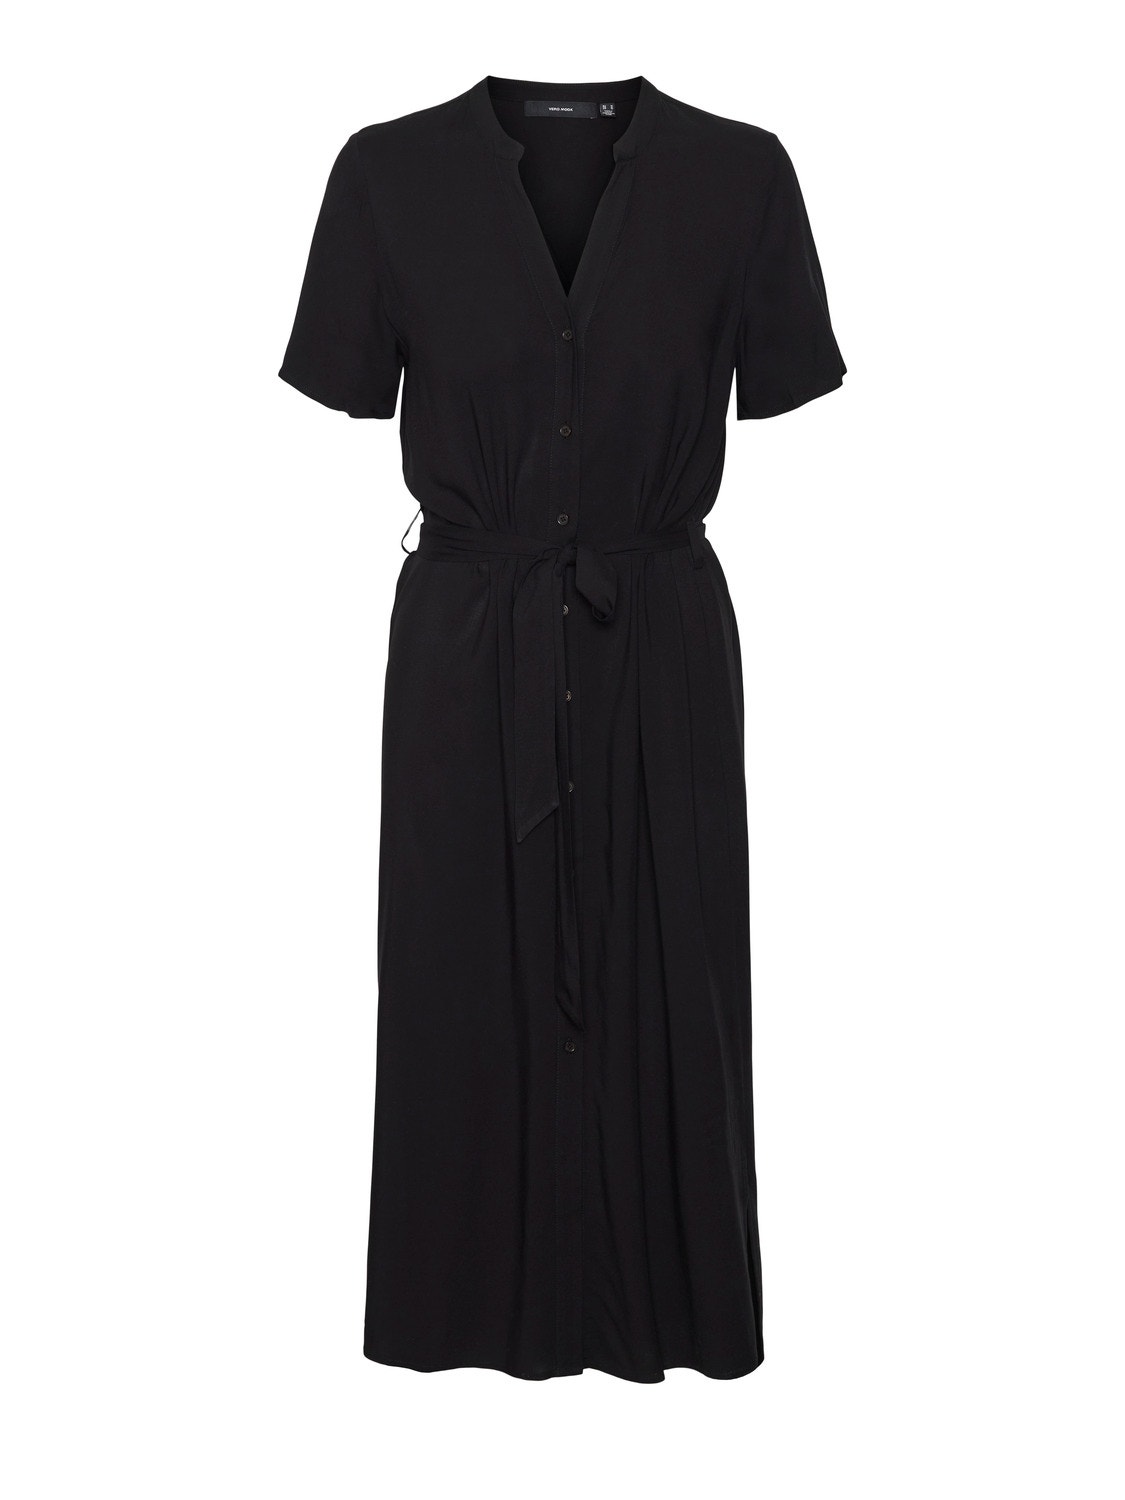 Vero Moda VMVICA Long dress -Black - 10291732